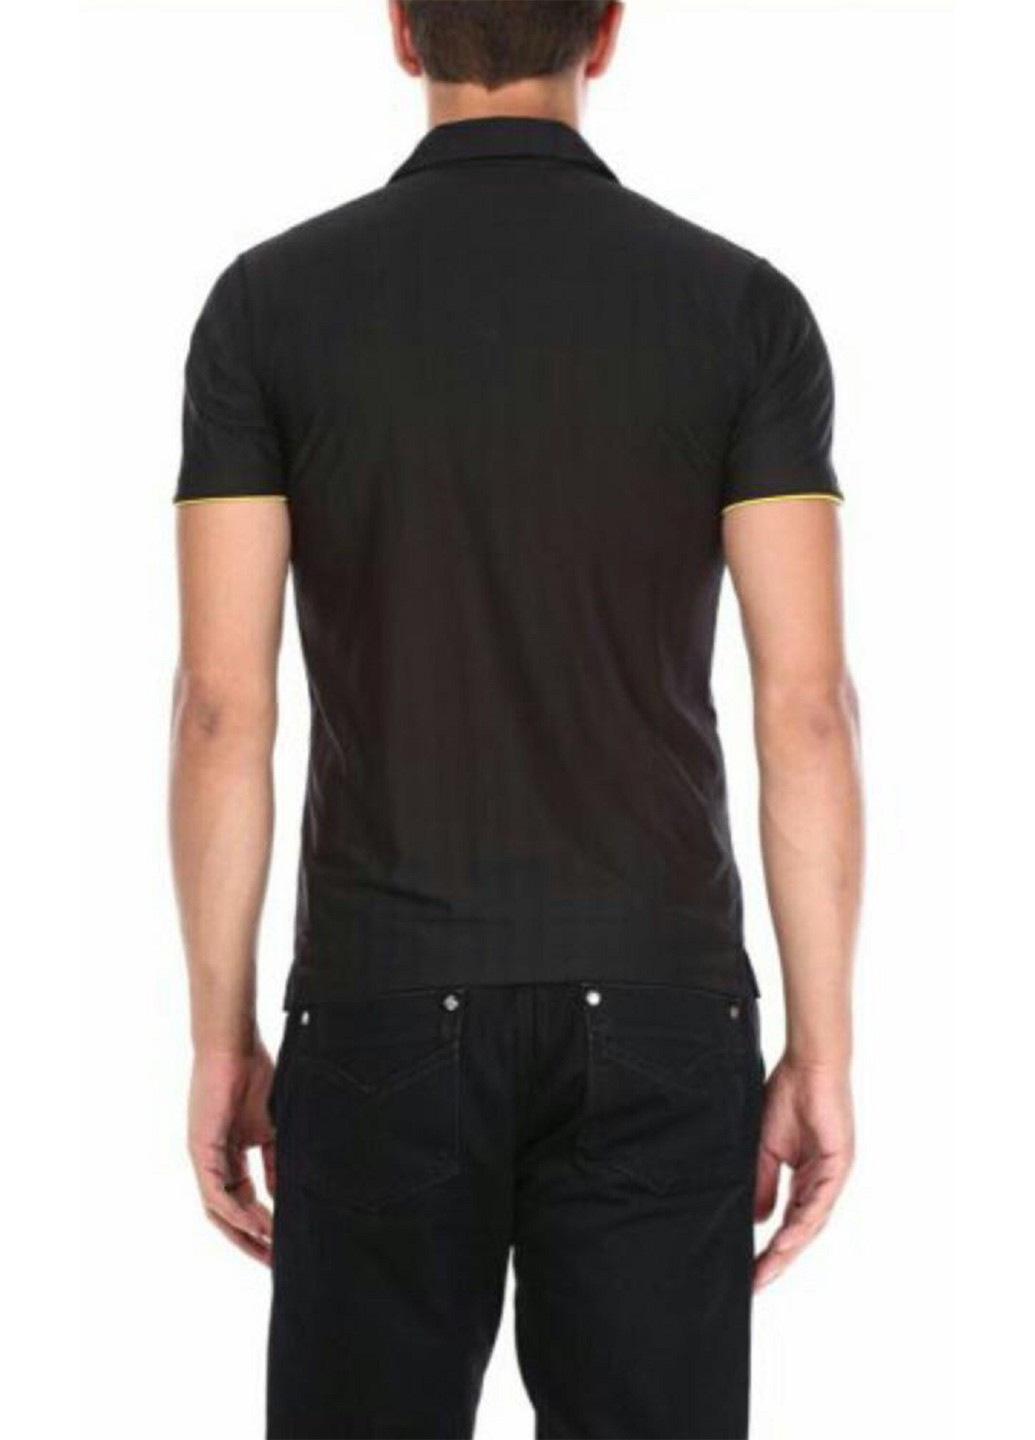 Черная футболка-поло для мужчин Nike в полоску